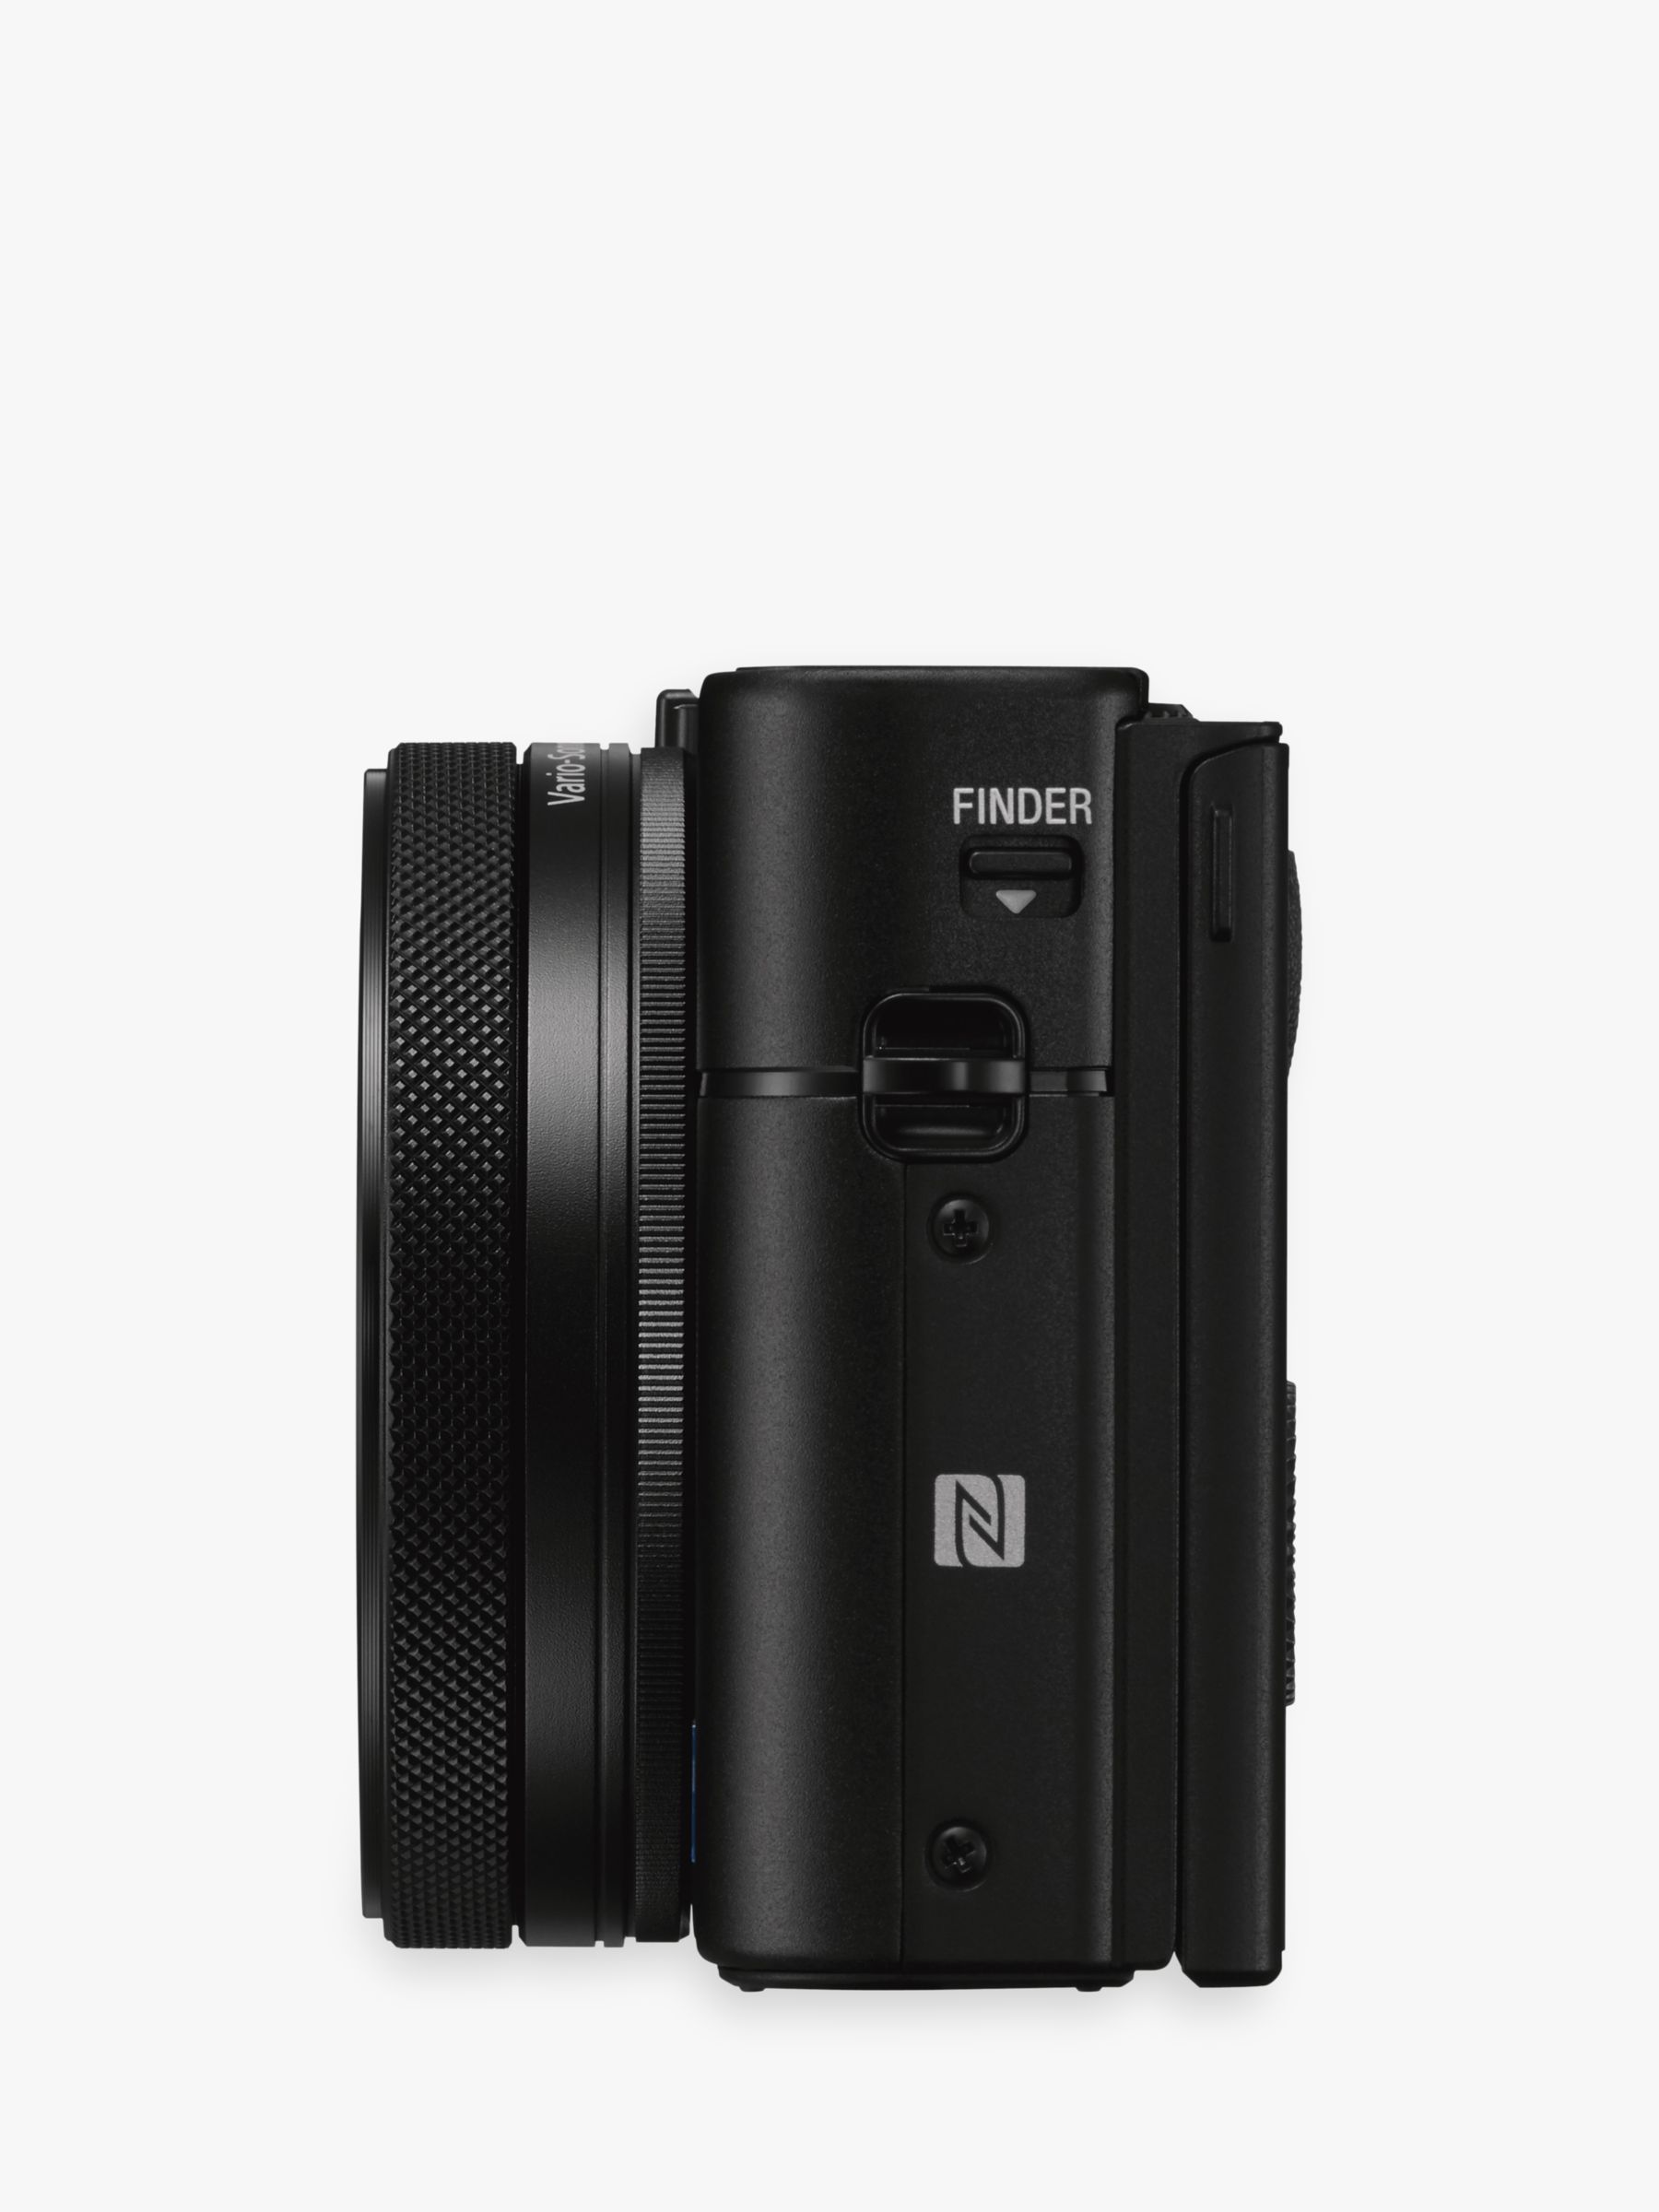 Sony Cyber-shot DSC-RX100 Va Camera, 4K, 20.1MP, 2.9x Optical Zoom